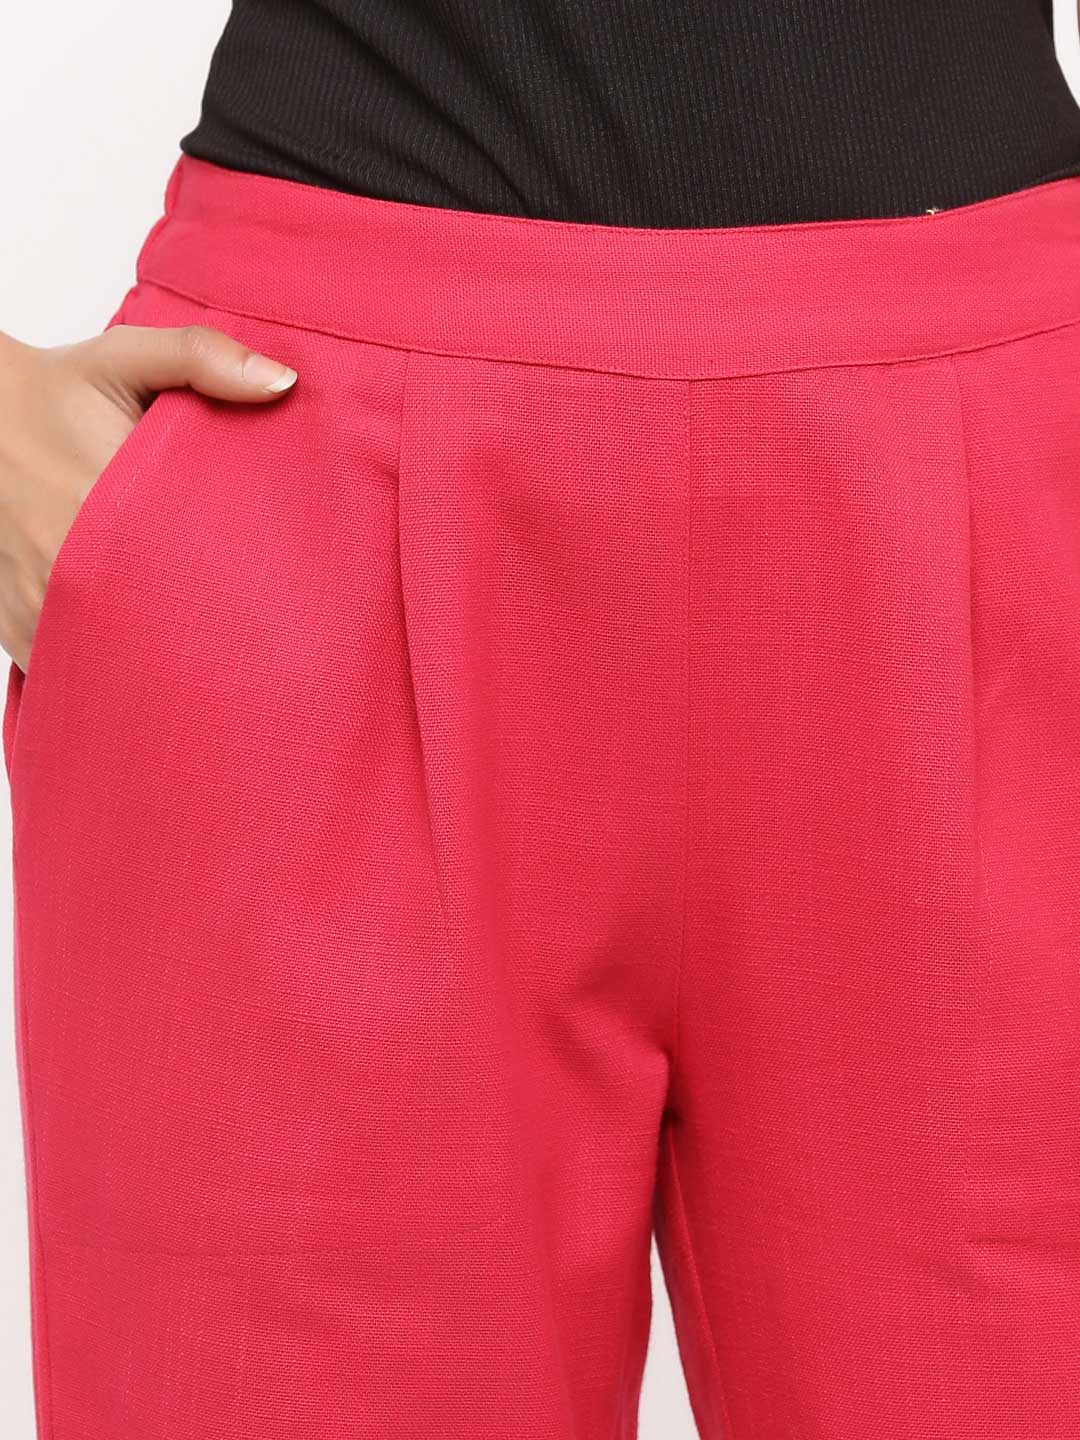 Rani Pink Solid Cotton Slub Pants